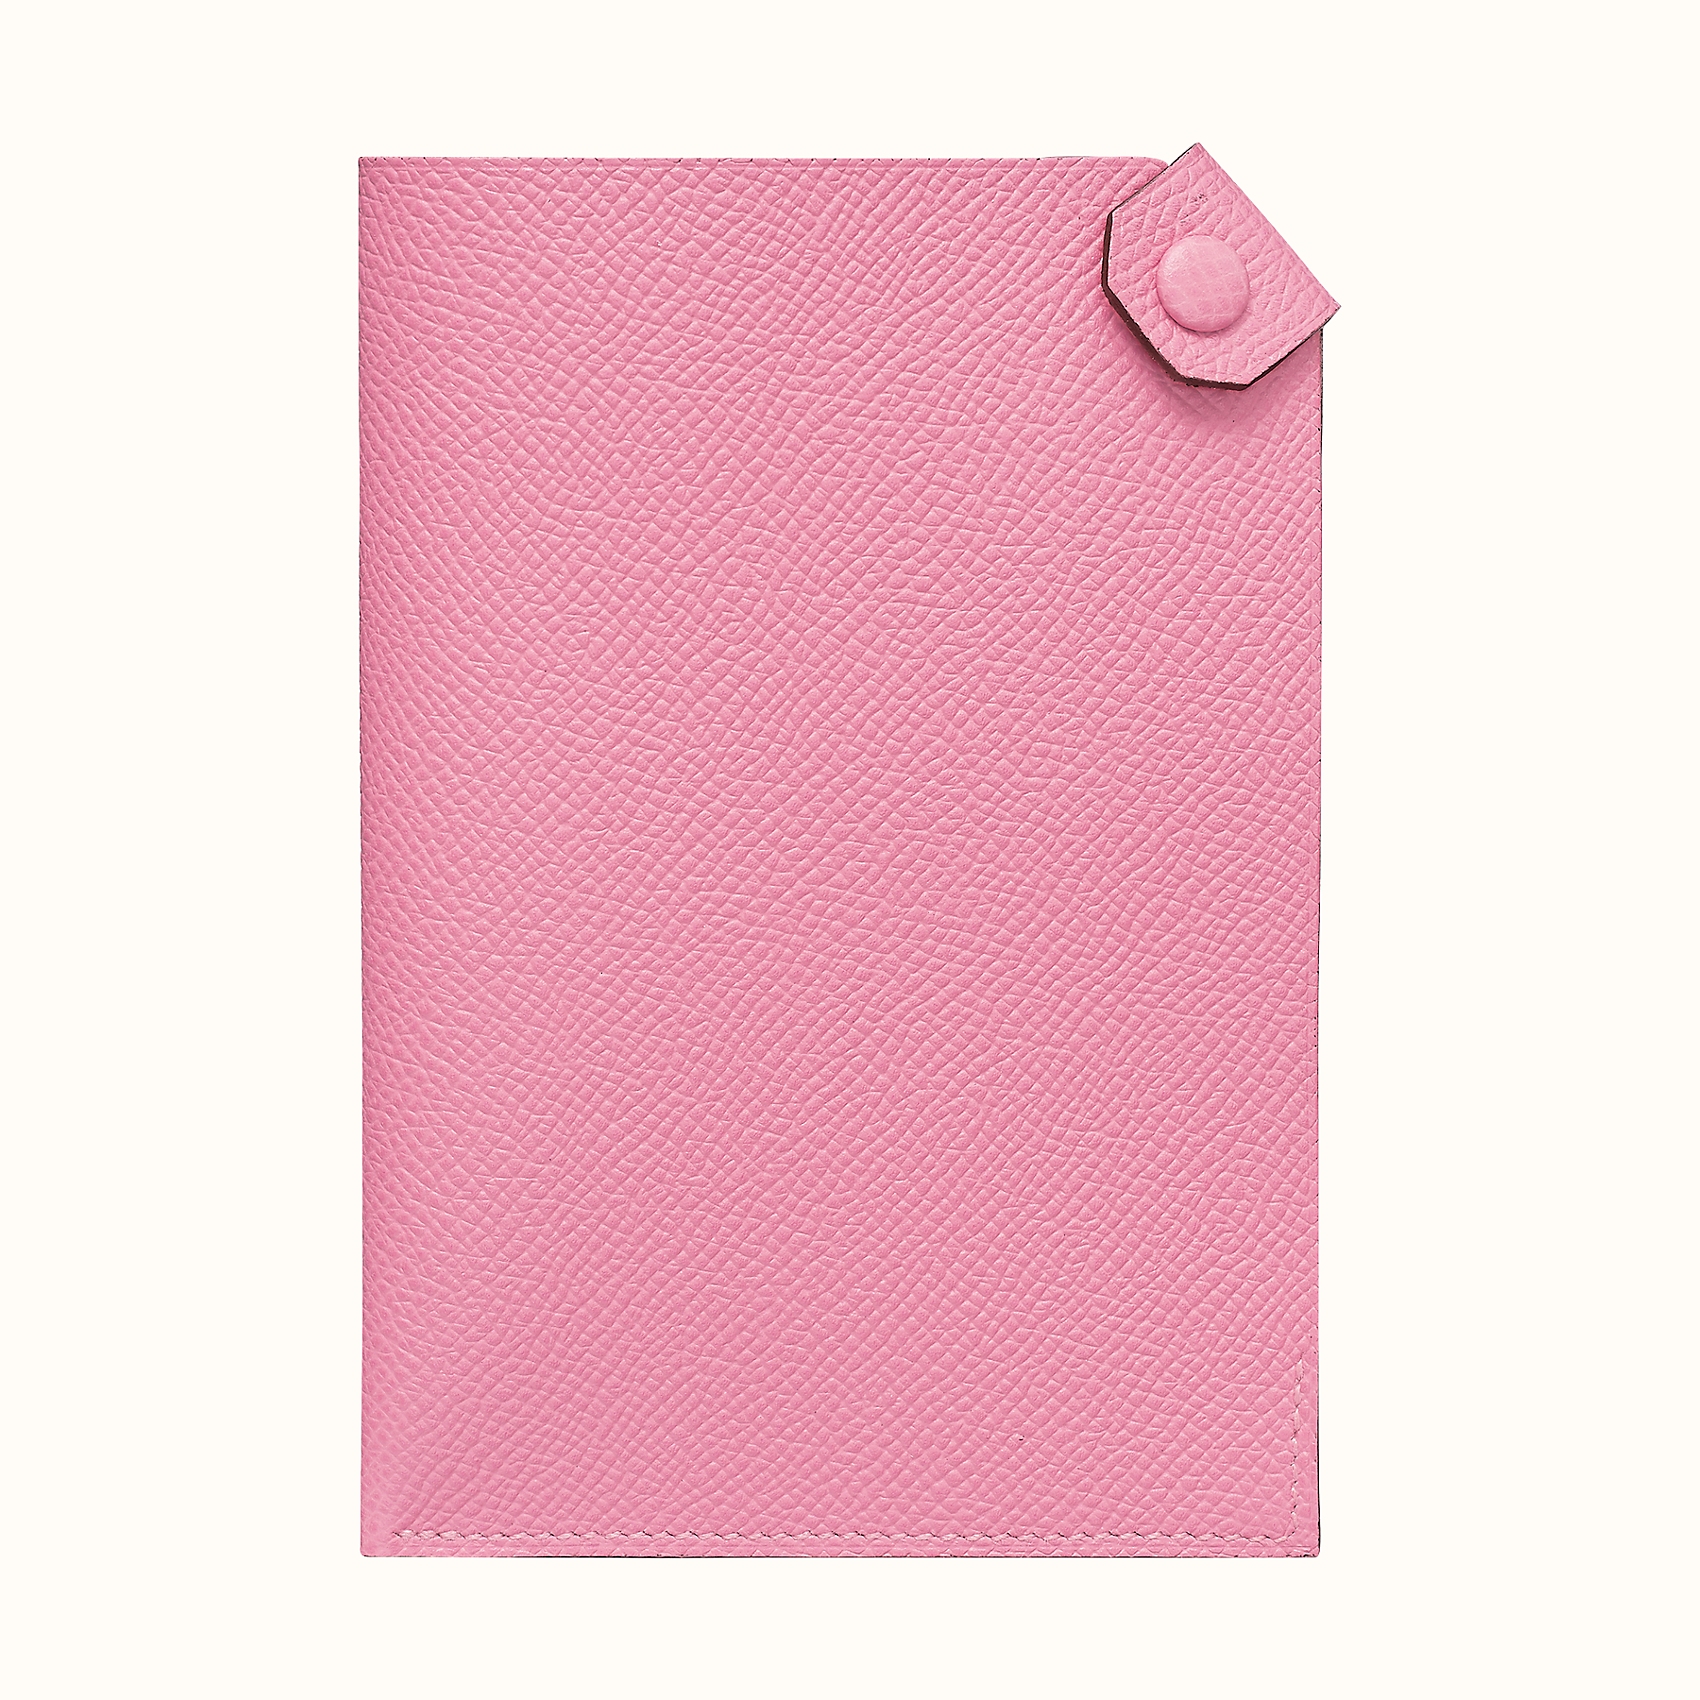 Hermès Color Guide: Pink Obsession